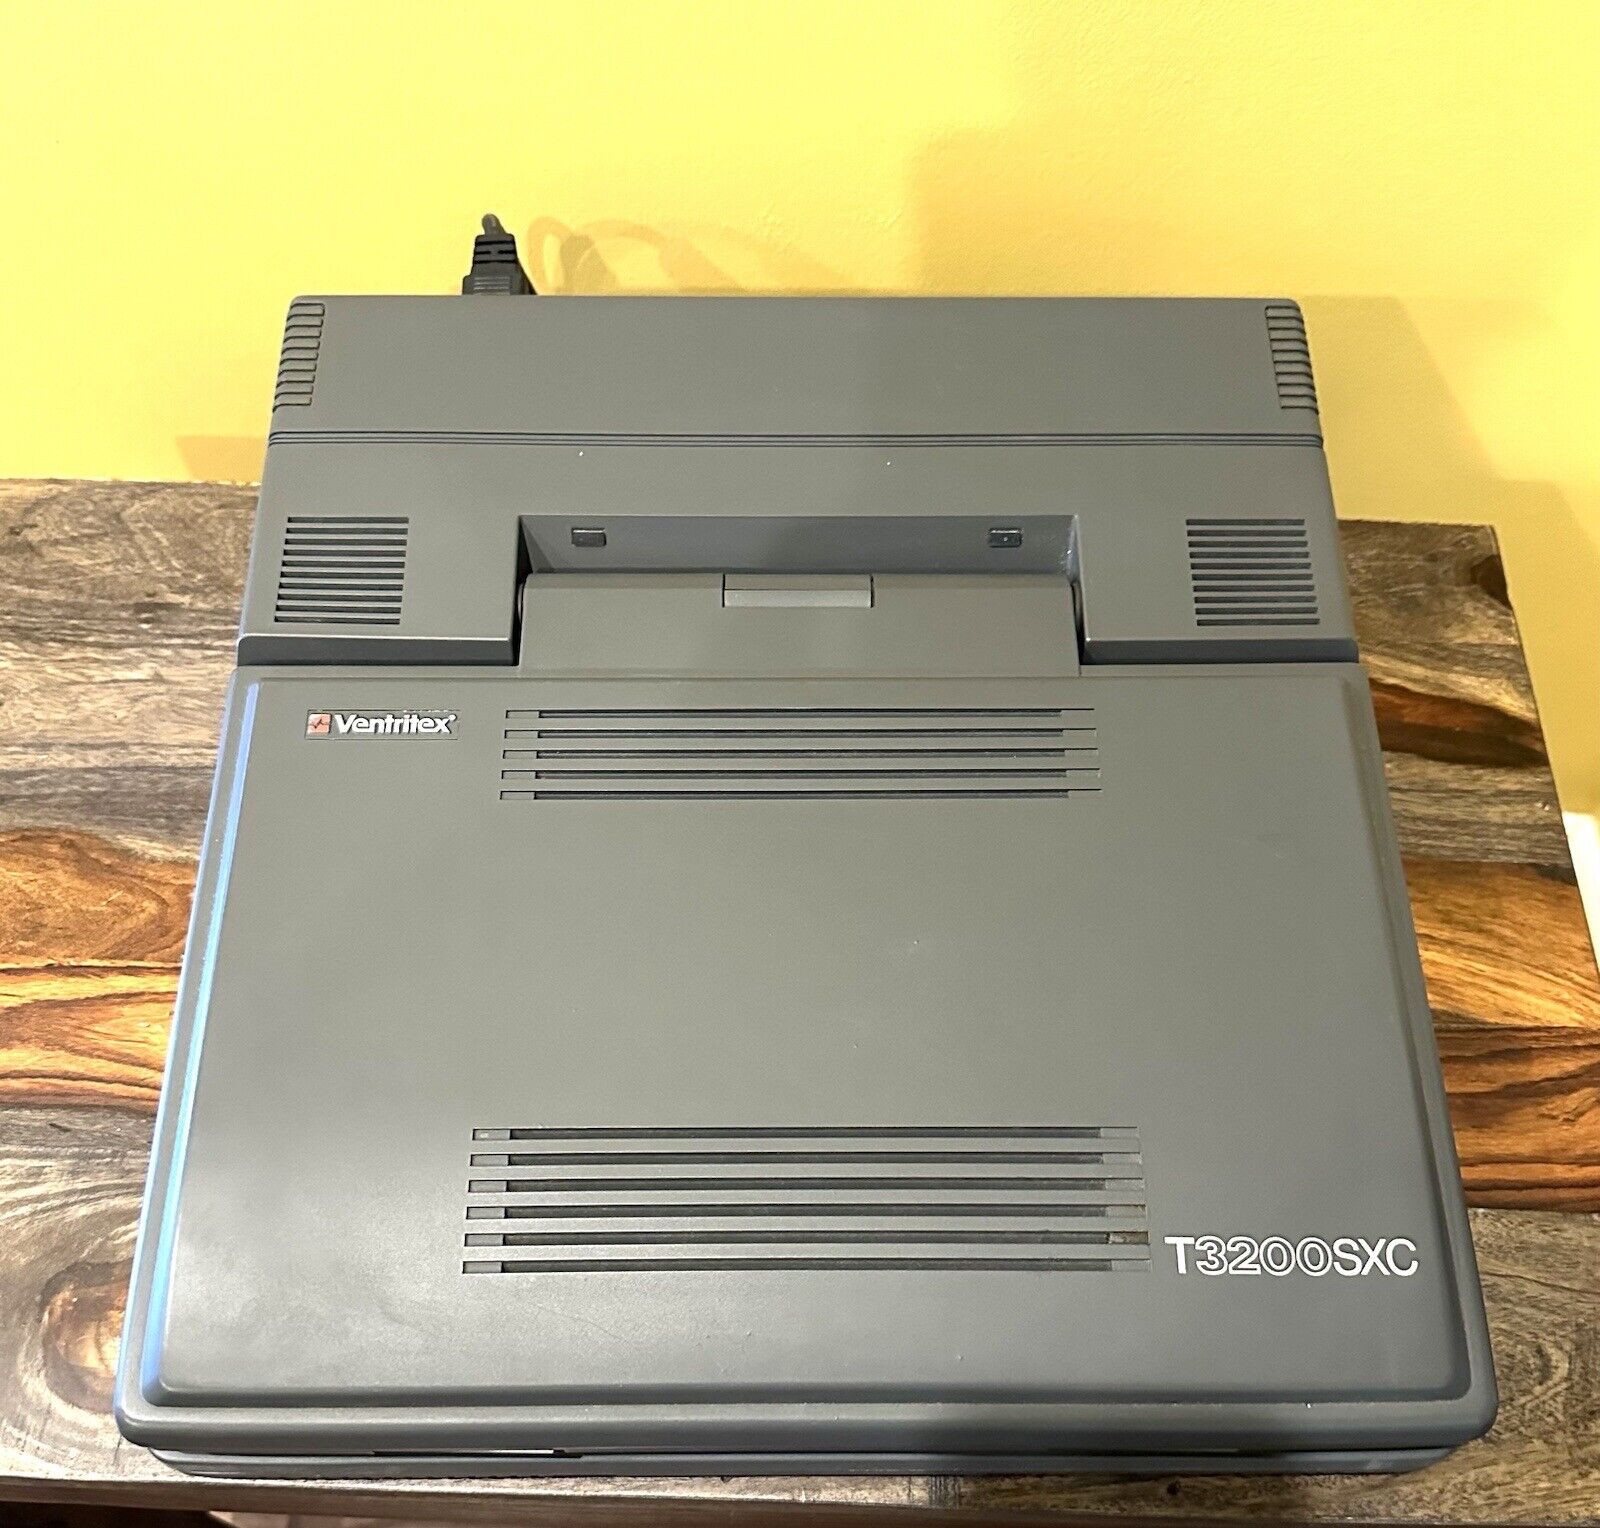 Vintage Toshiba T3200sxc  Portable Computer Laptop Turns On White Screen. As Is